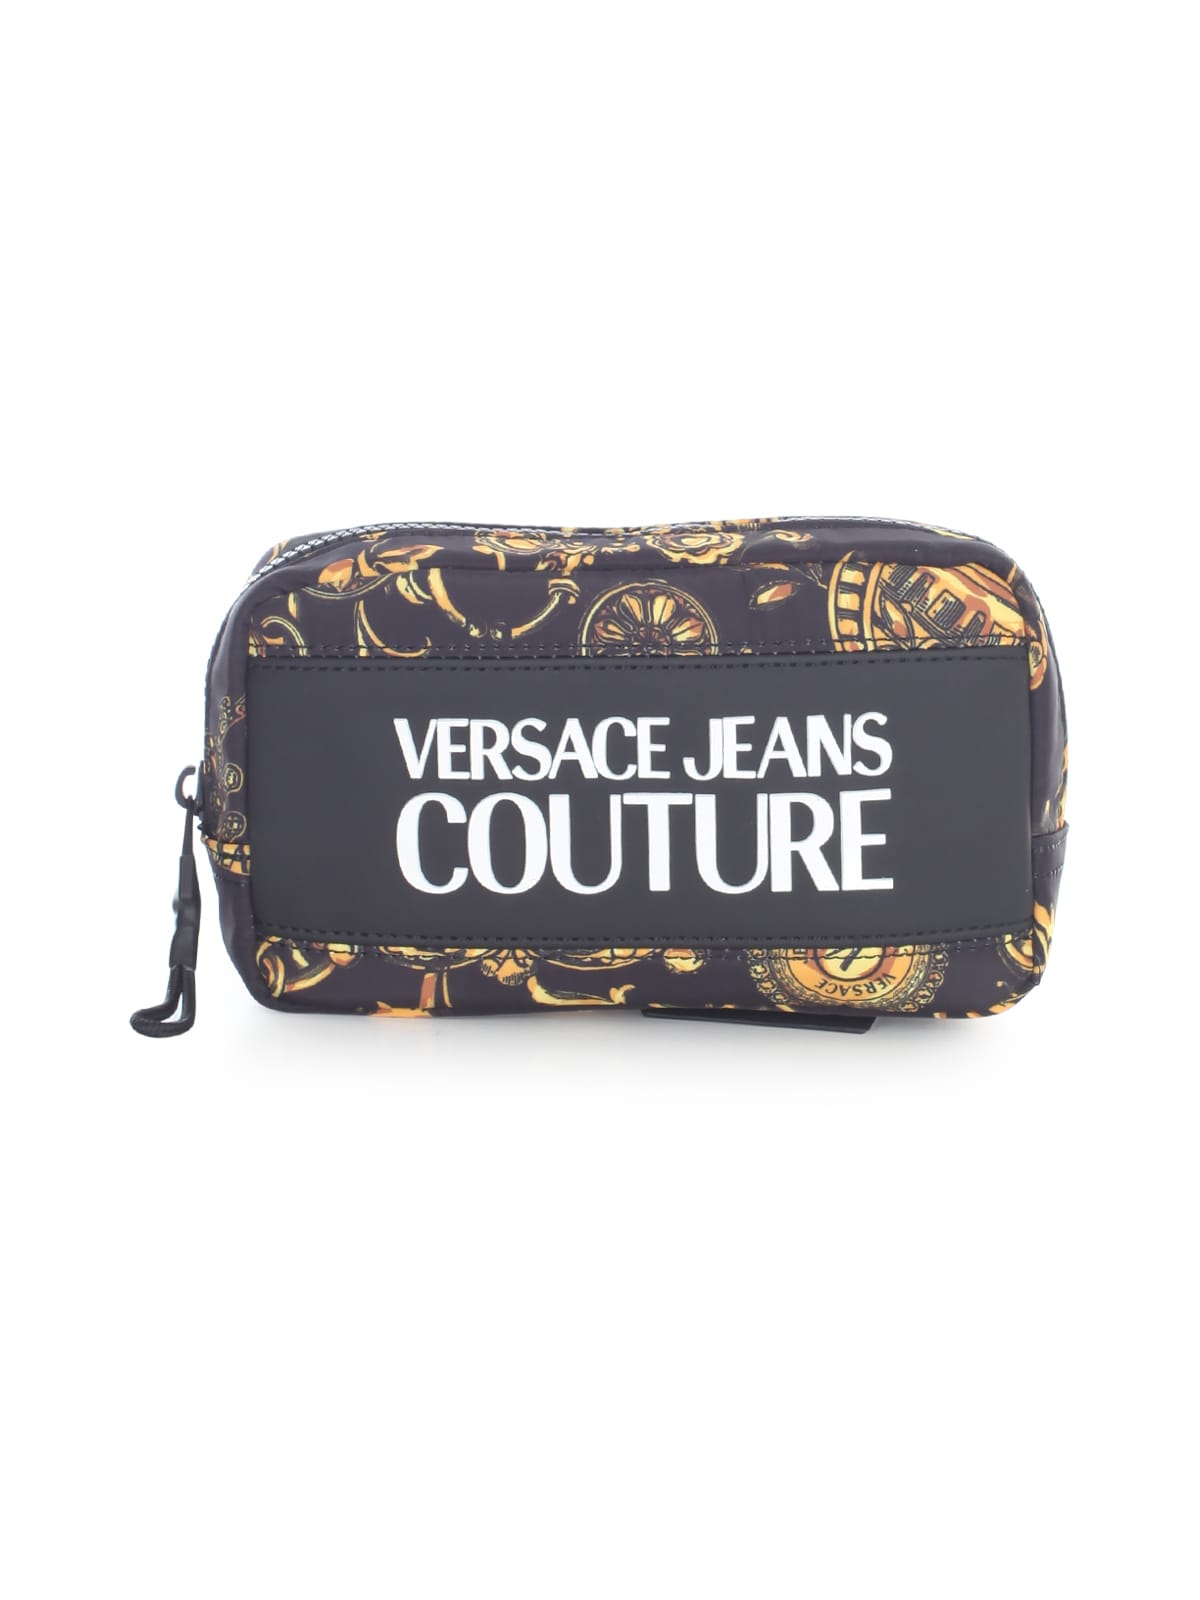 Versace Jeans Couture Sketch 4 Bags Printed Nylon Macrologo Belt Bag